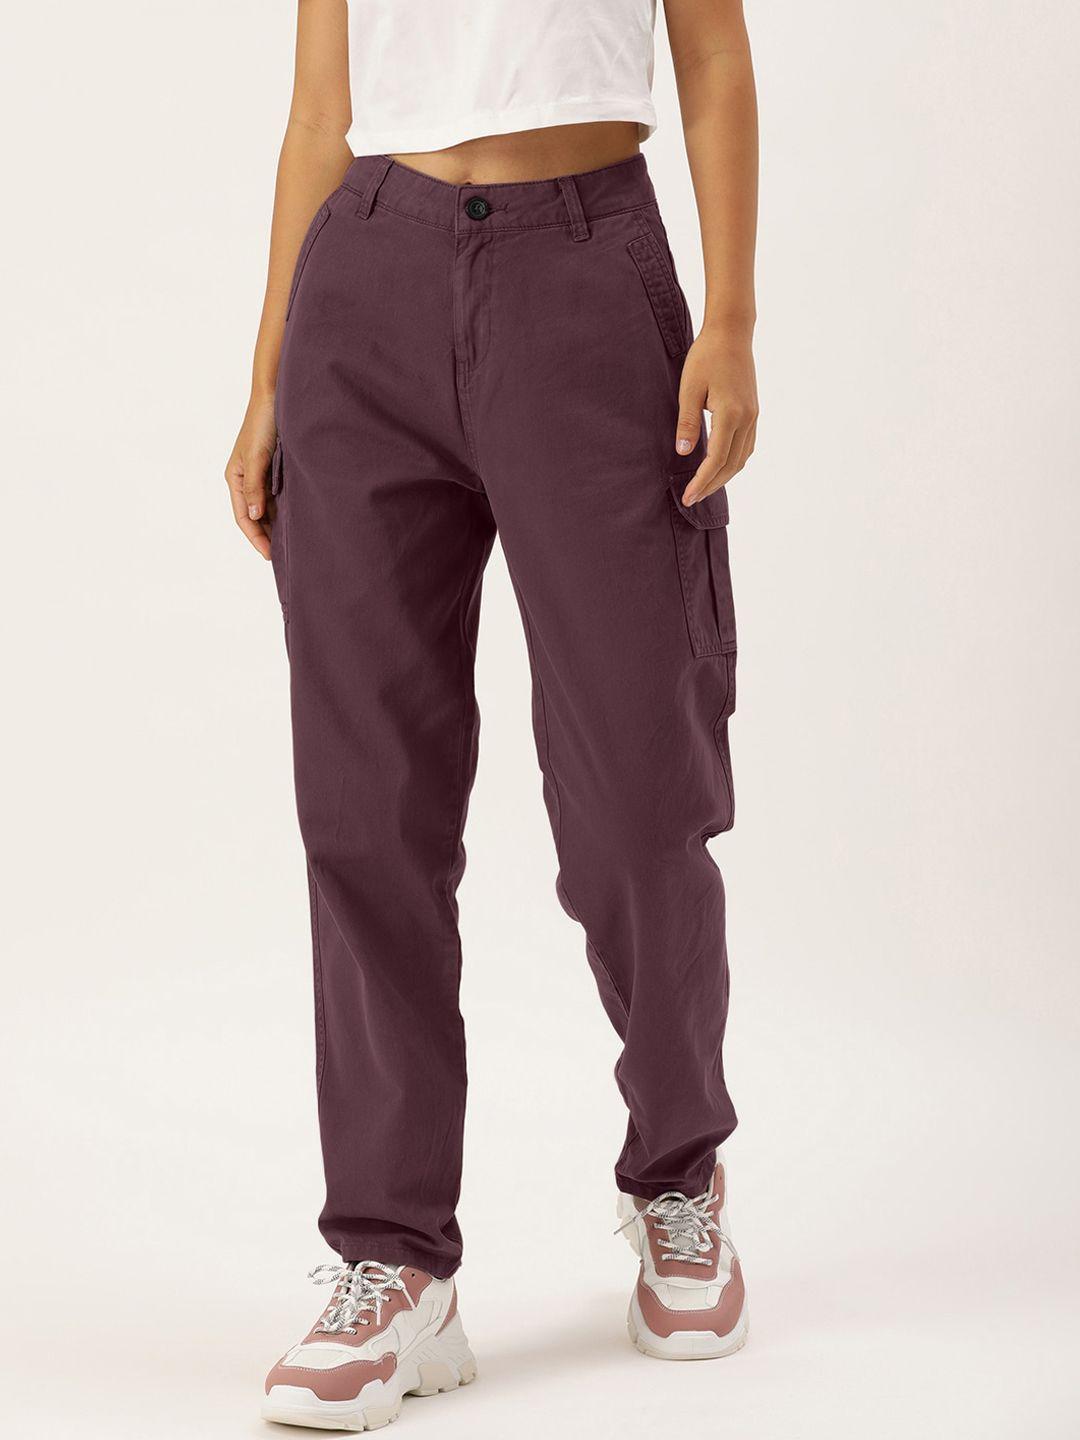 ivoc women maroon slim fit joggers cotton trousers